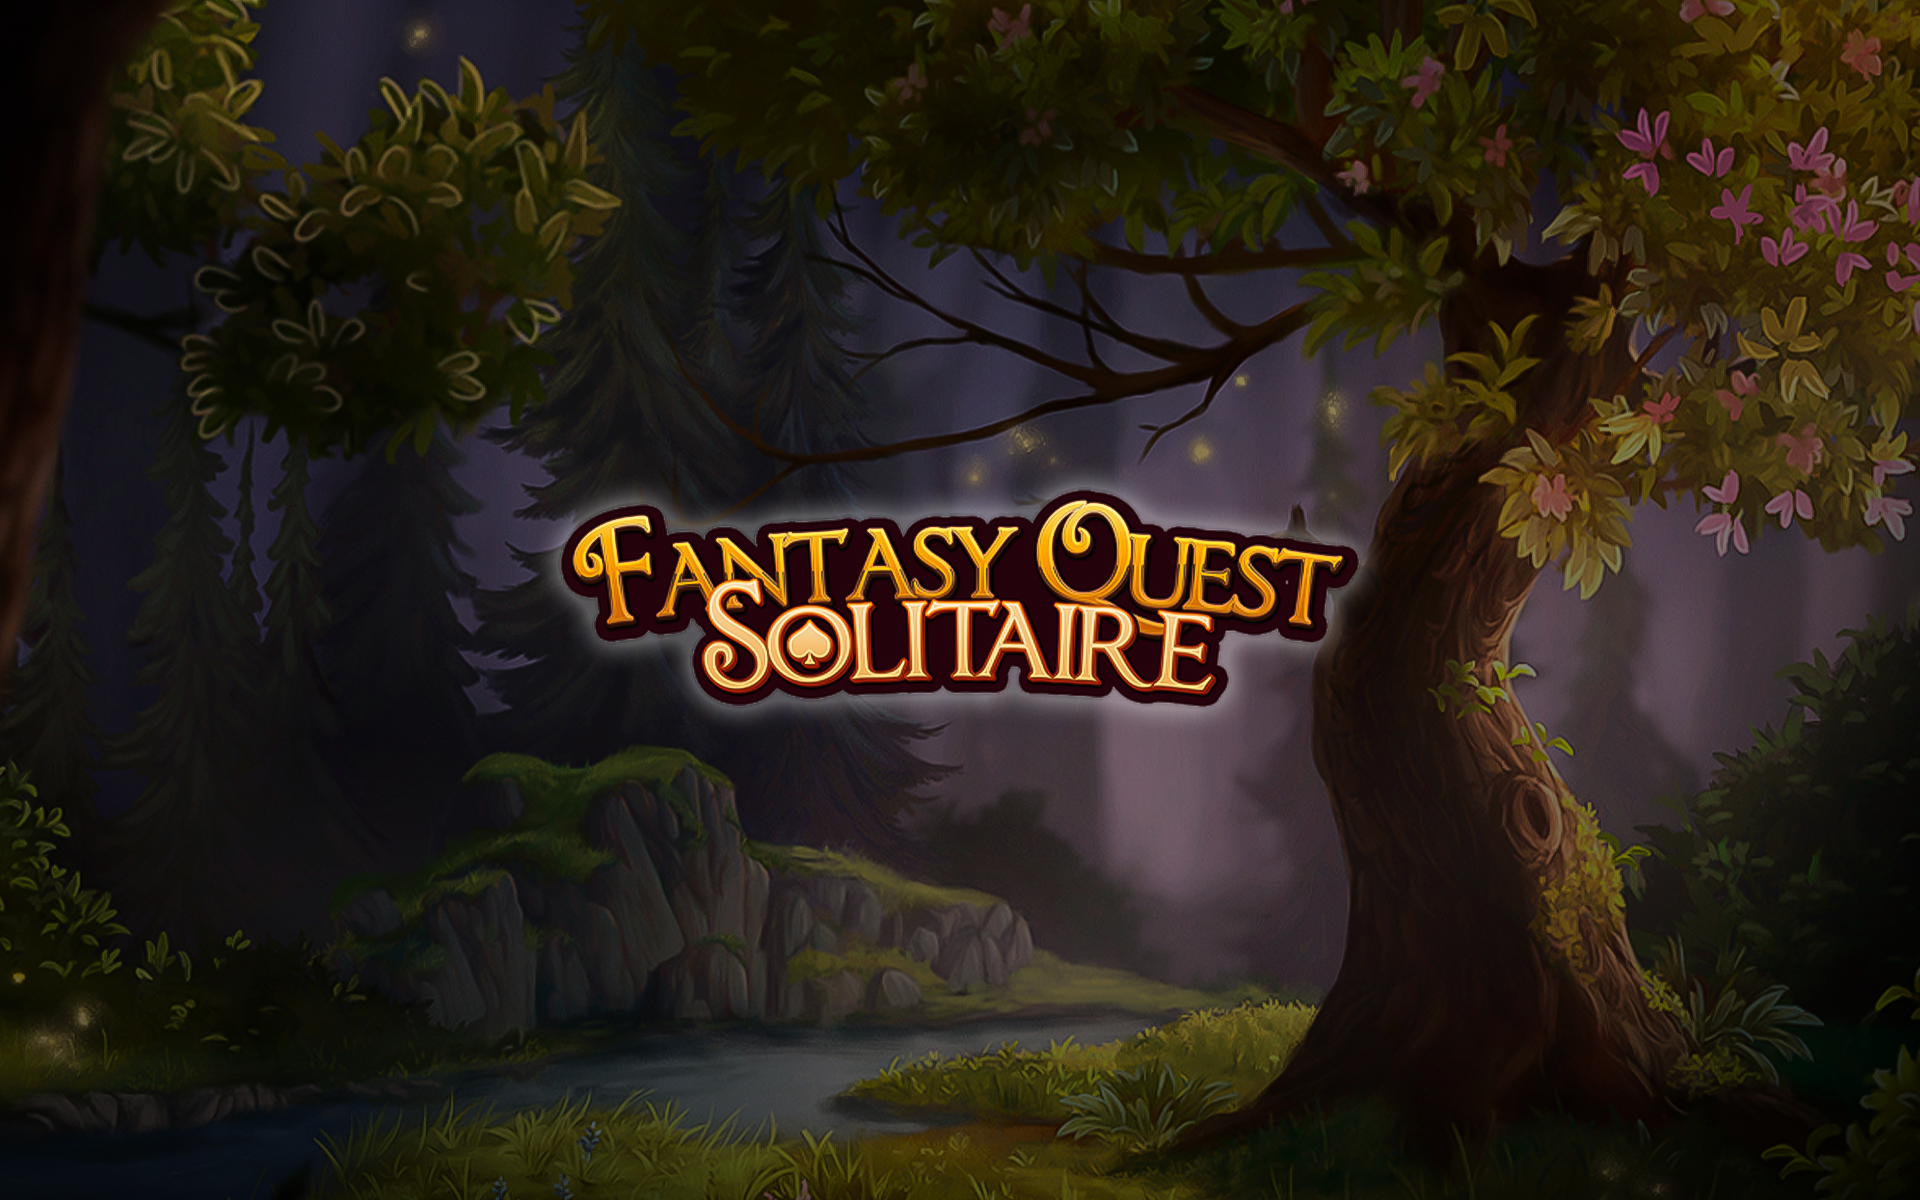 Fantasy Quest Solitaire, PC Game